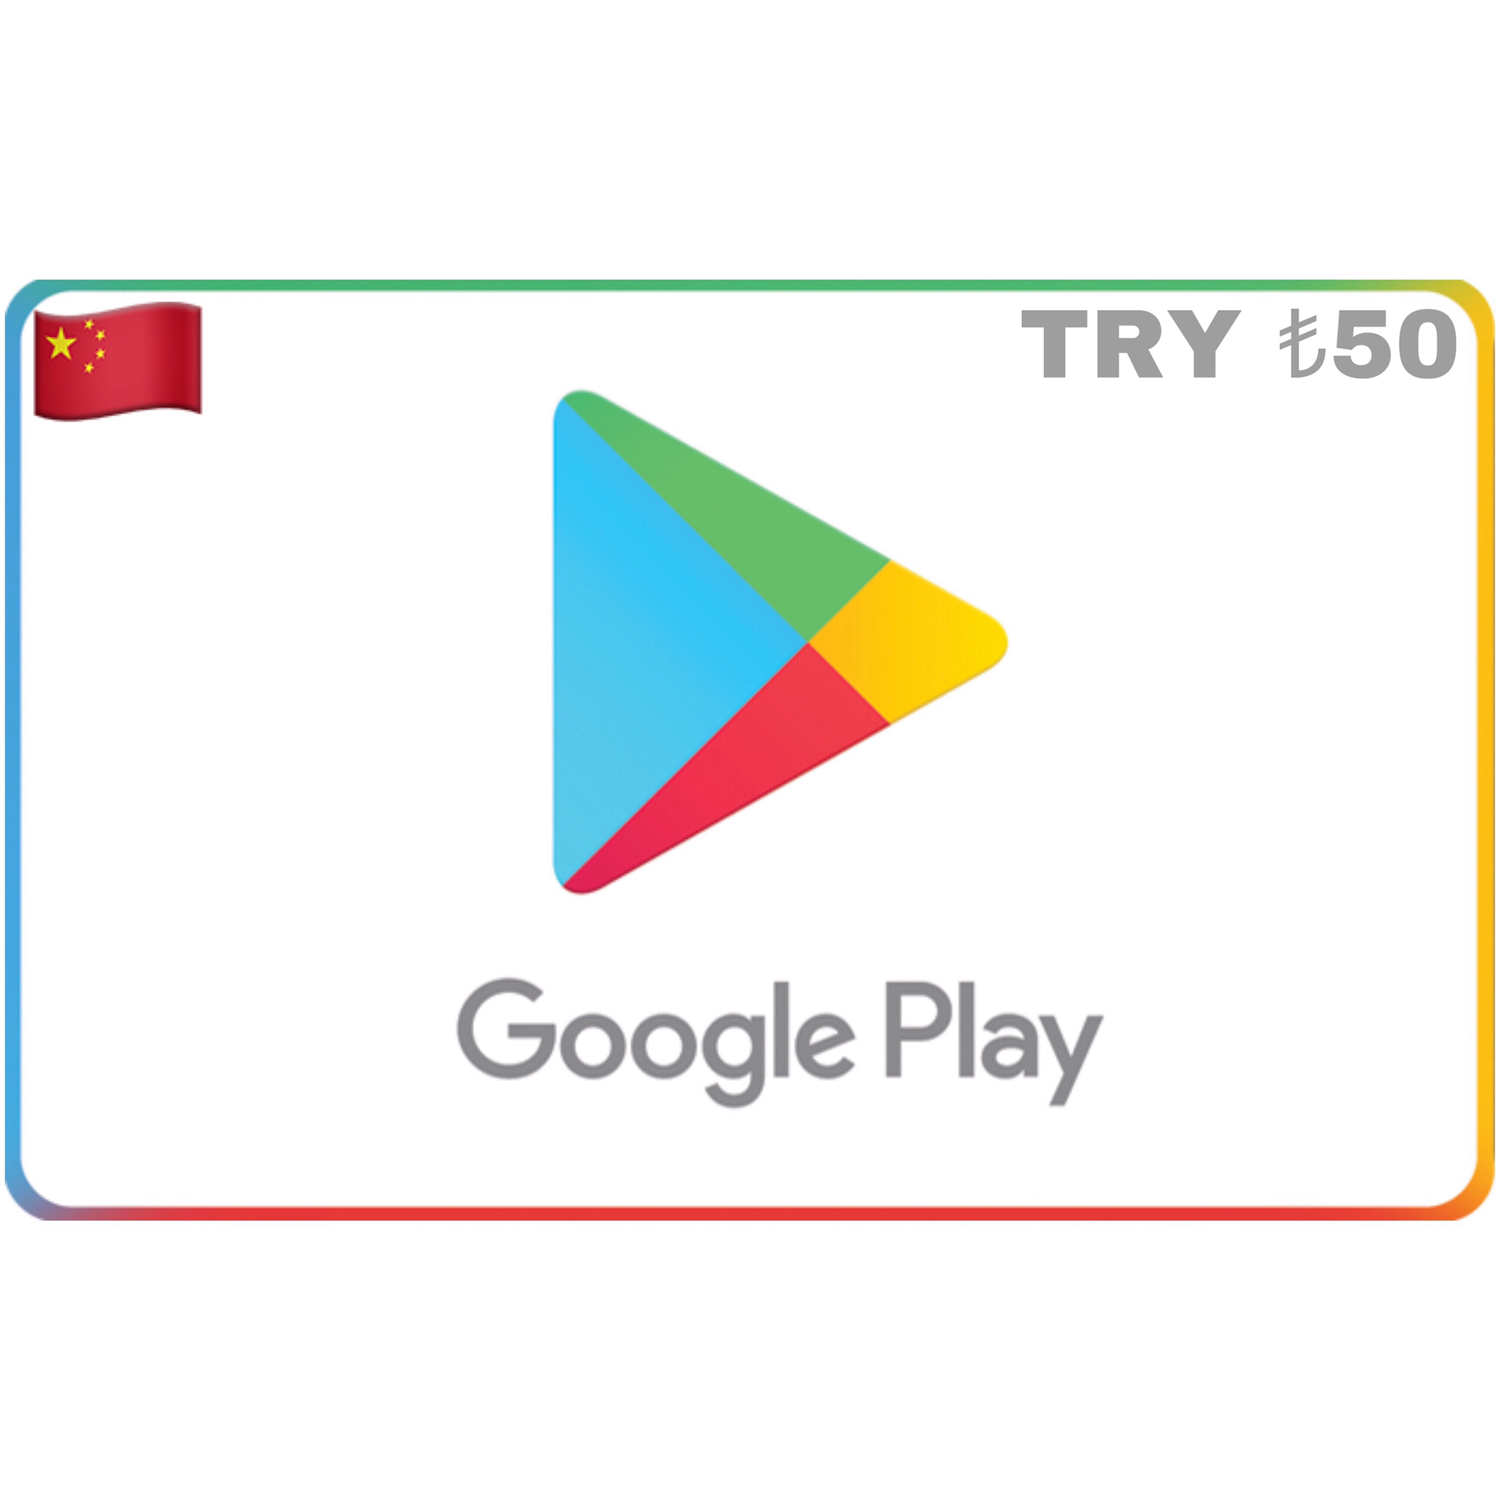 Google Play Turkey TRY ₺50